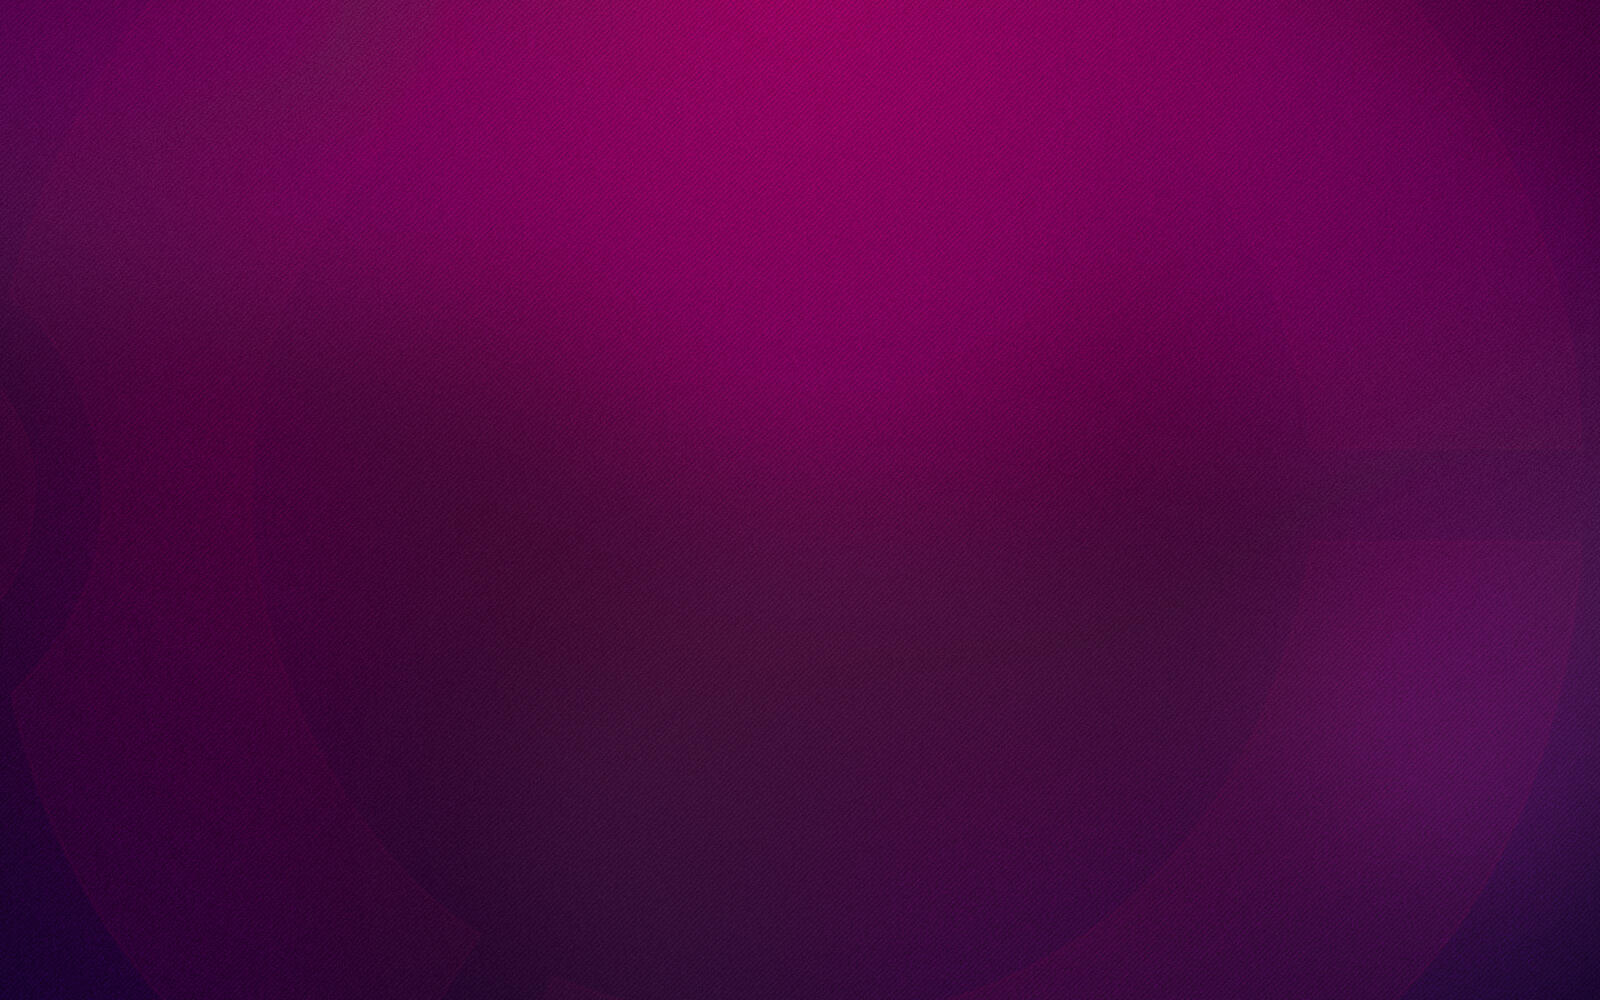 Wallpapers minimalism background pink on the desktop